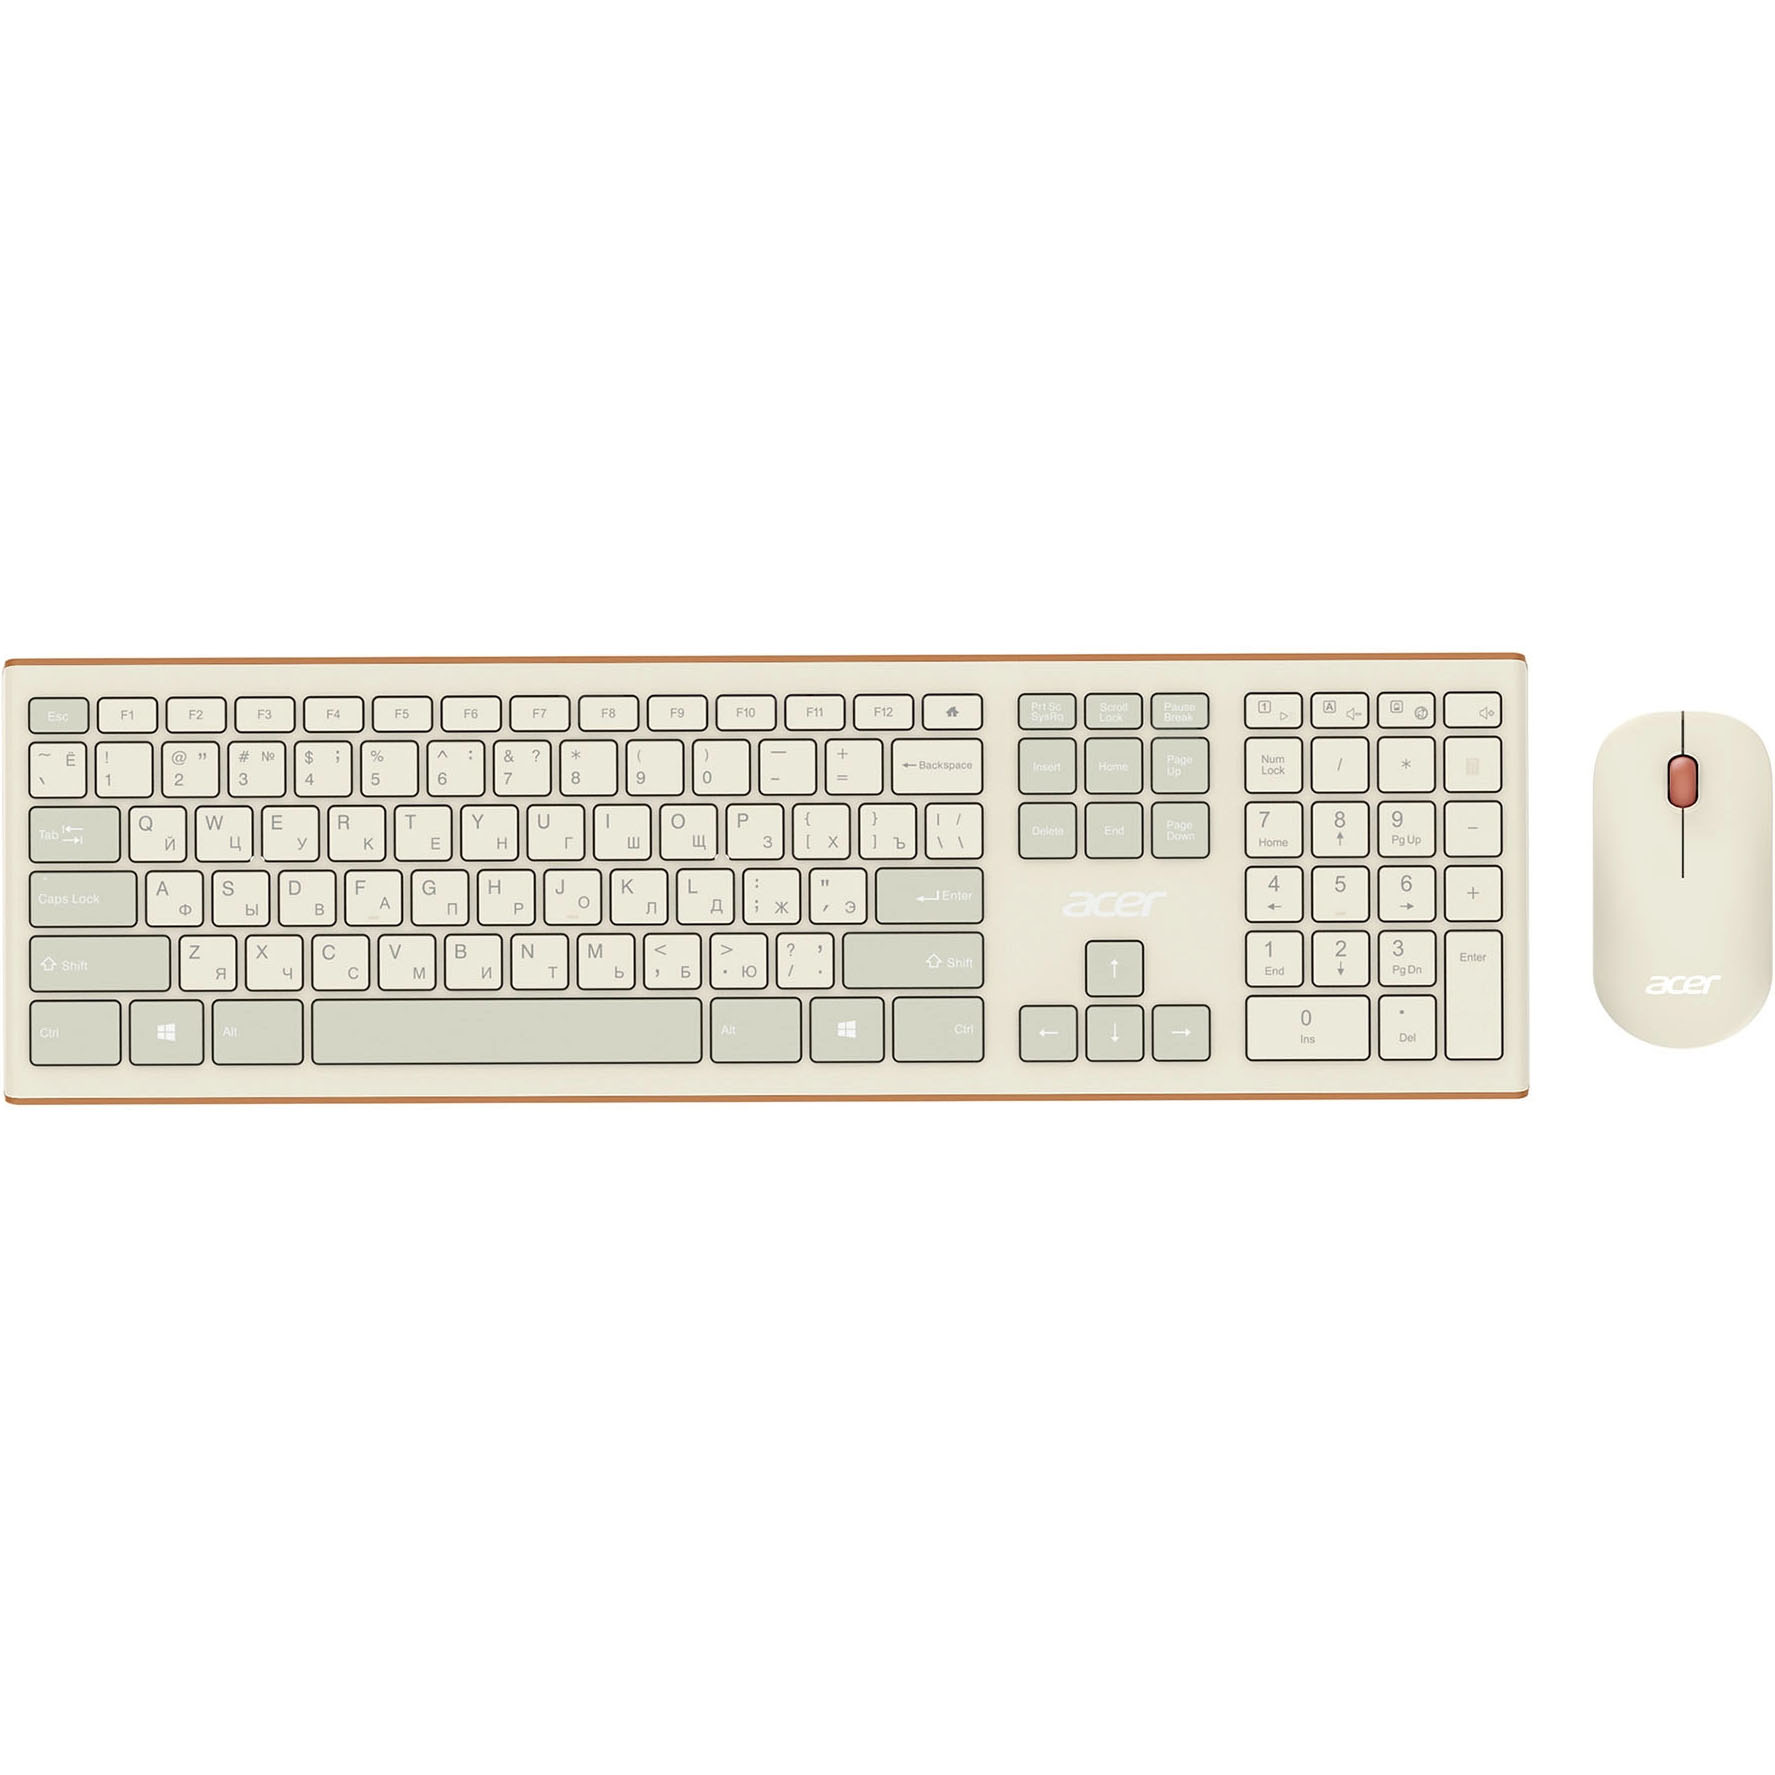 Комплект клавиатуры и мыши Acer OCC200 бежевый, коричневый клавиатура мышь acer occ200 бежевый коричневый zl accee 004